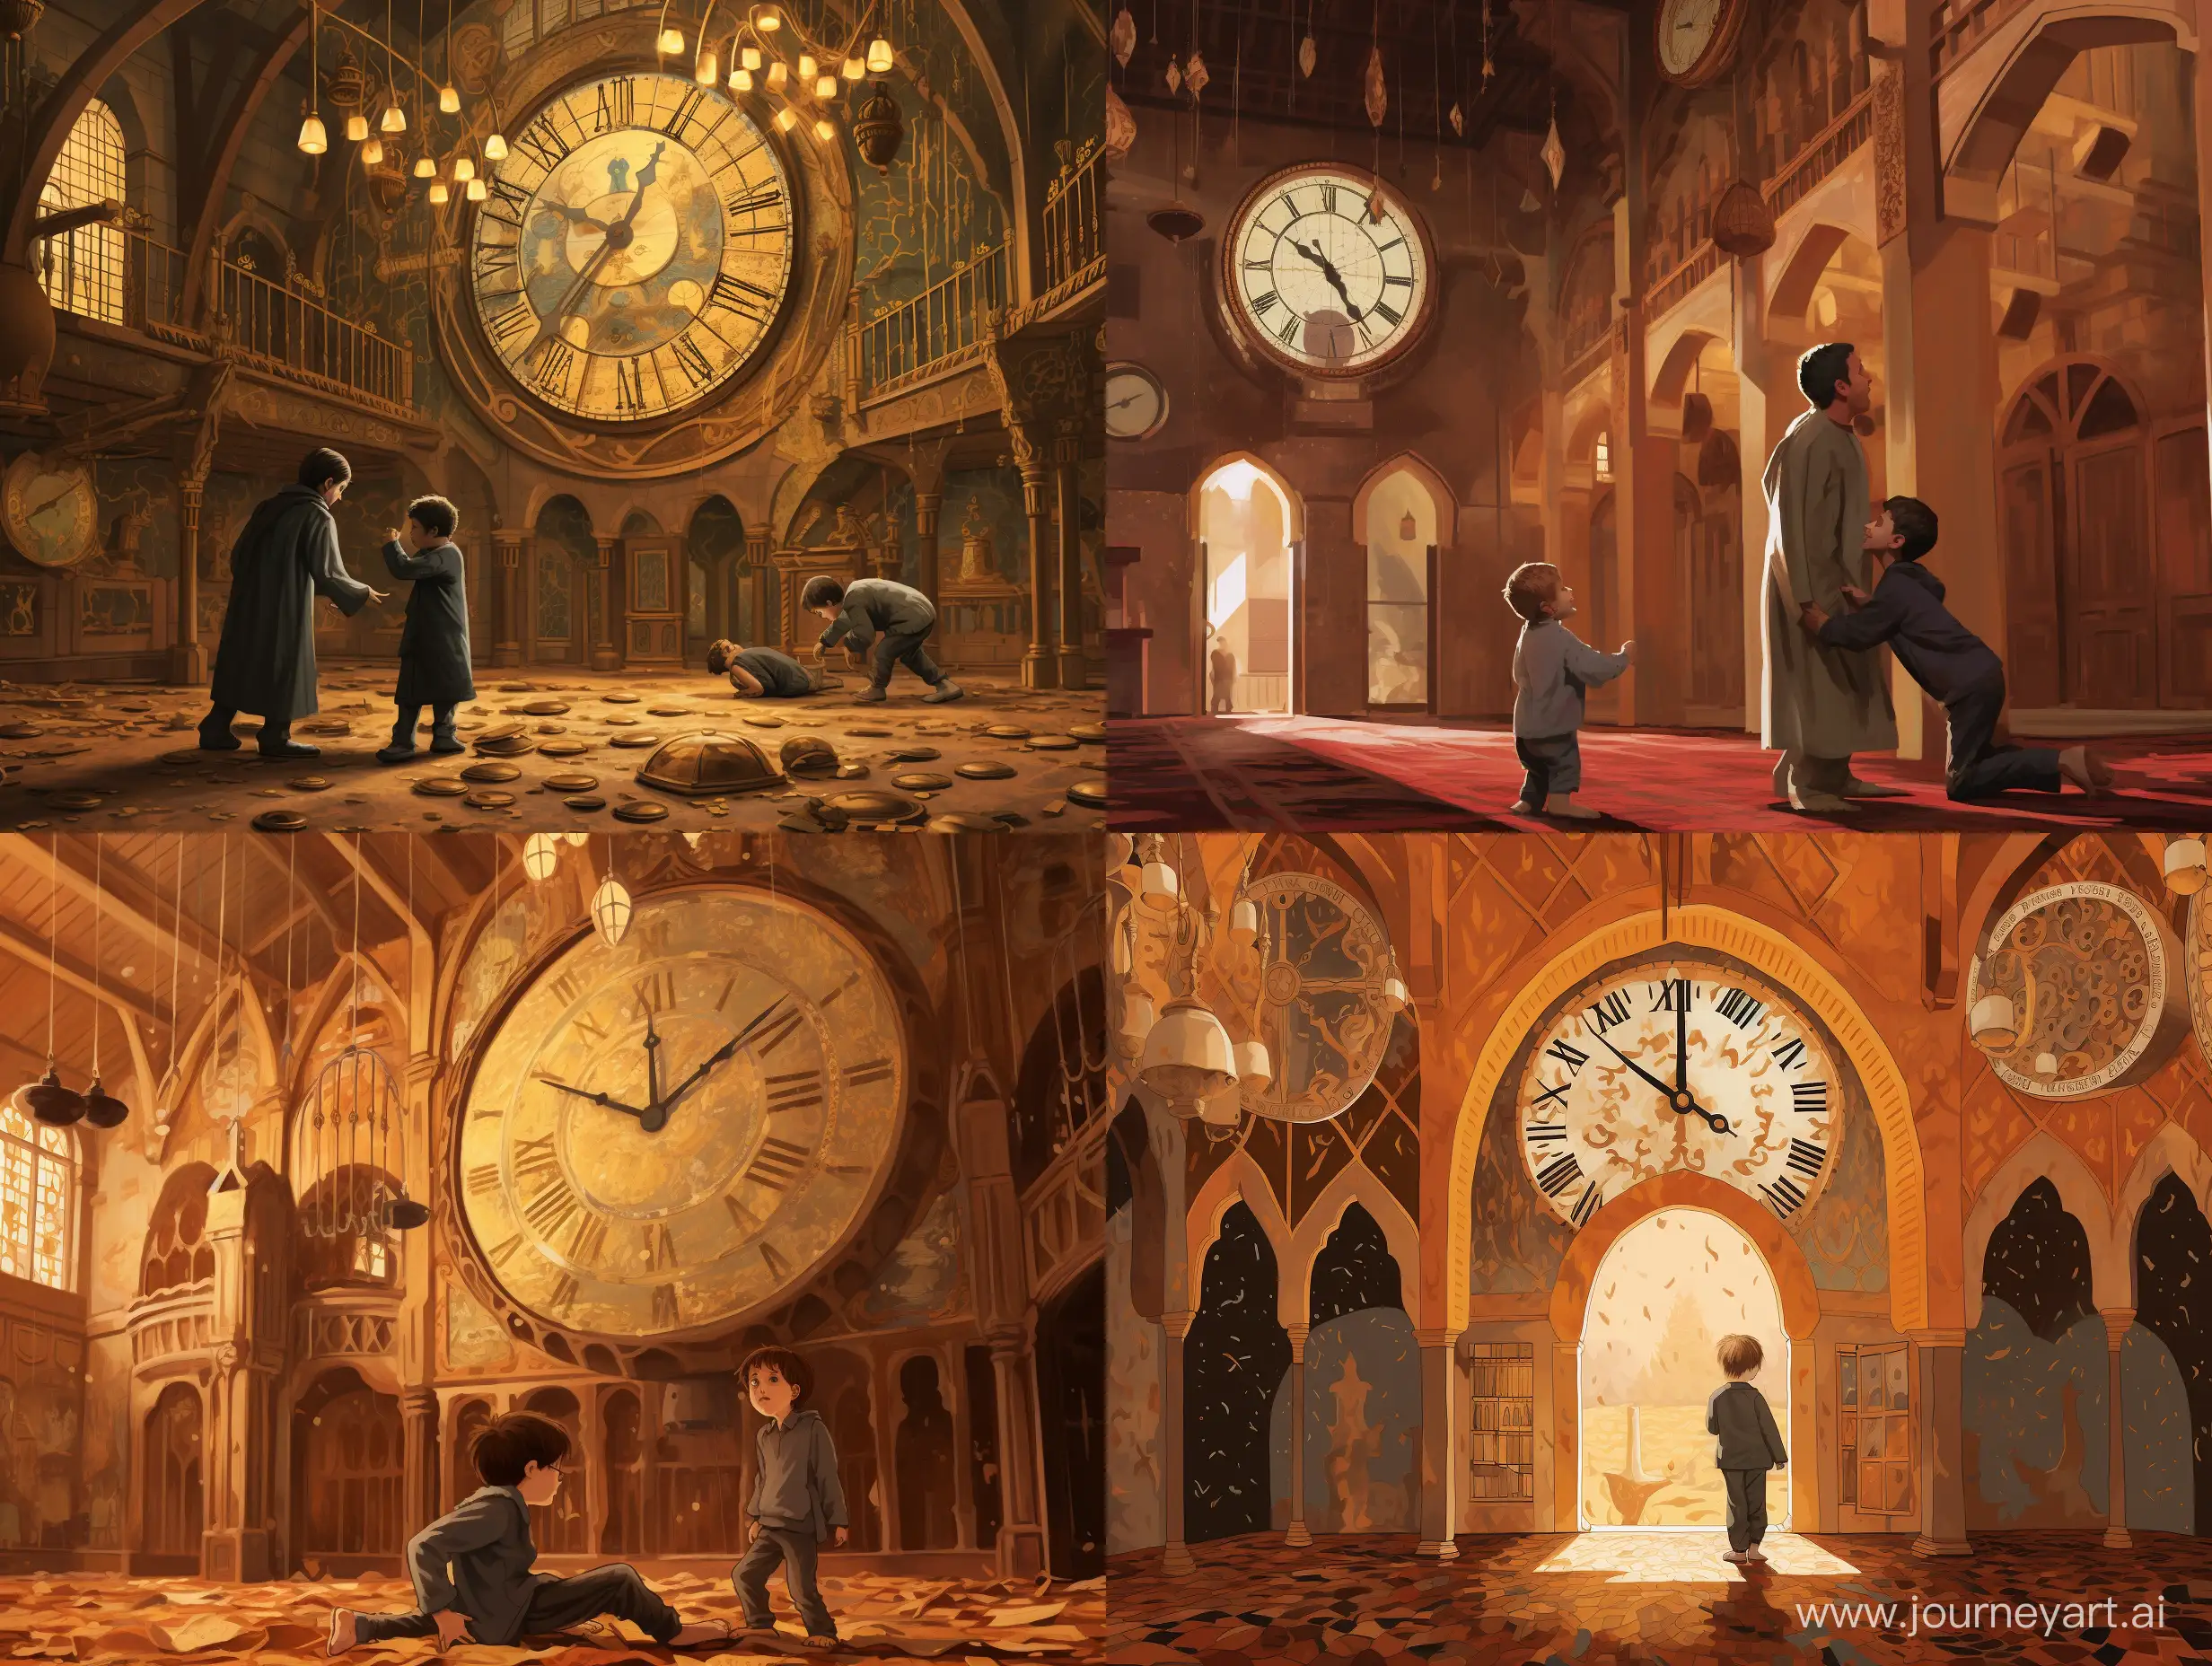 Arabic-Hall-Guards-Disciplining-Boy-Under-Enchanted-Clocks